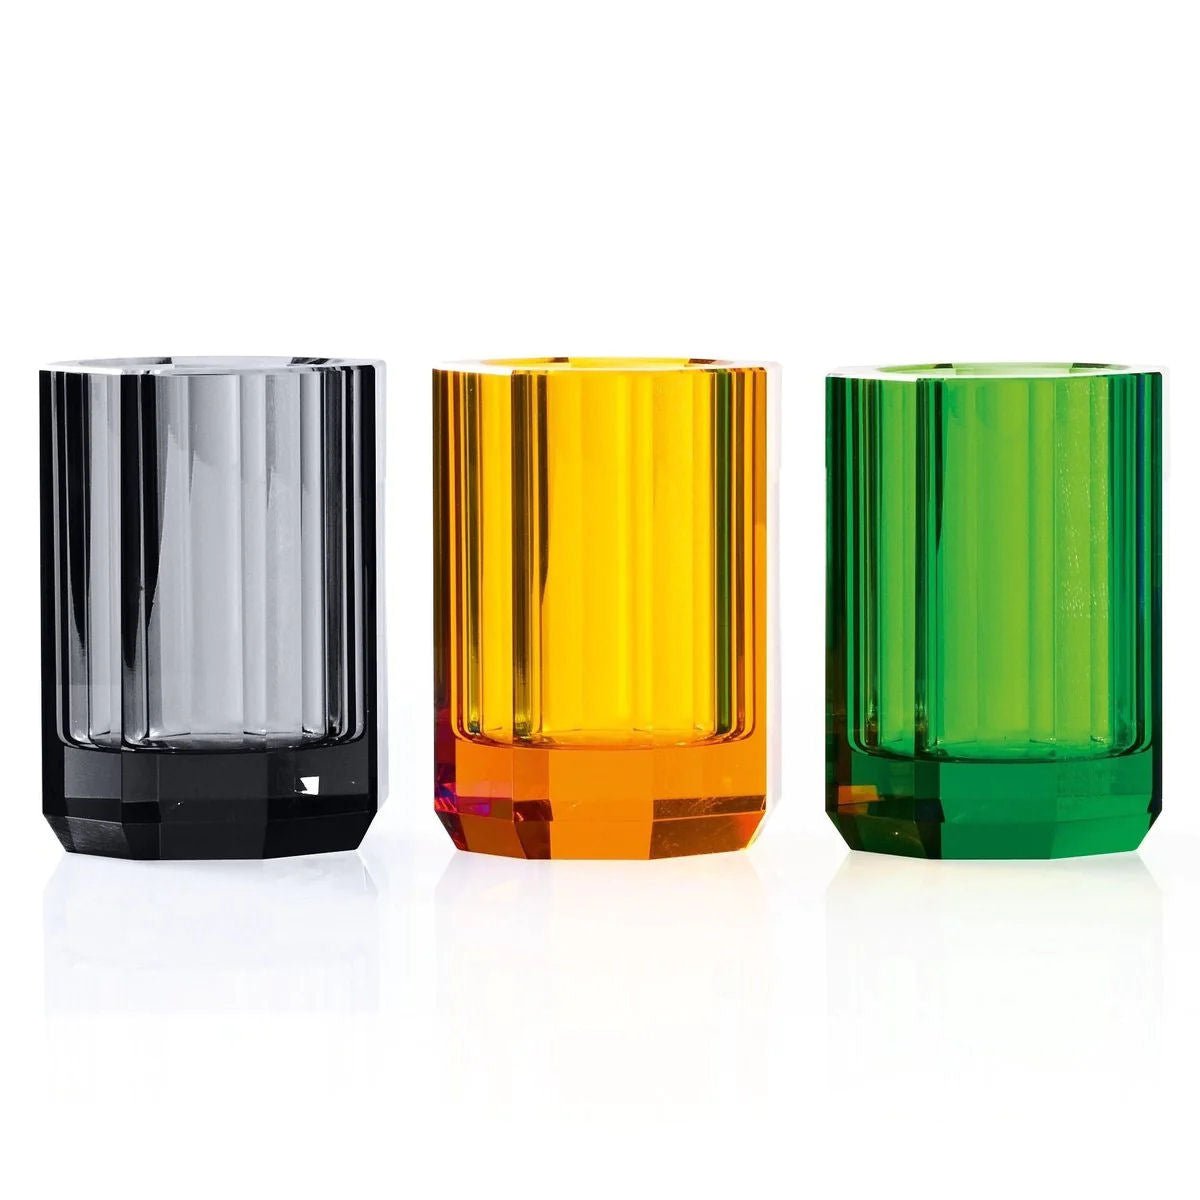 Luxury English GreenCrystal Glass Toothbrush Tumbler Holder - |VESIMI Design| Luxury Bathrooms & Deco